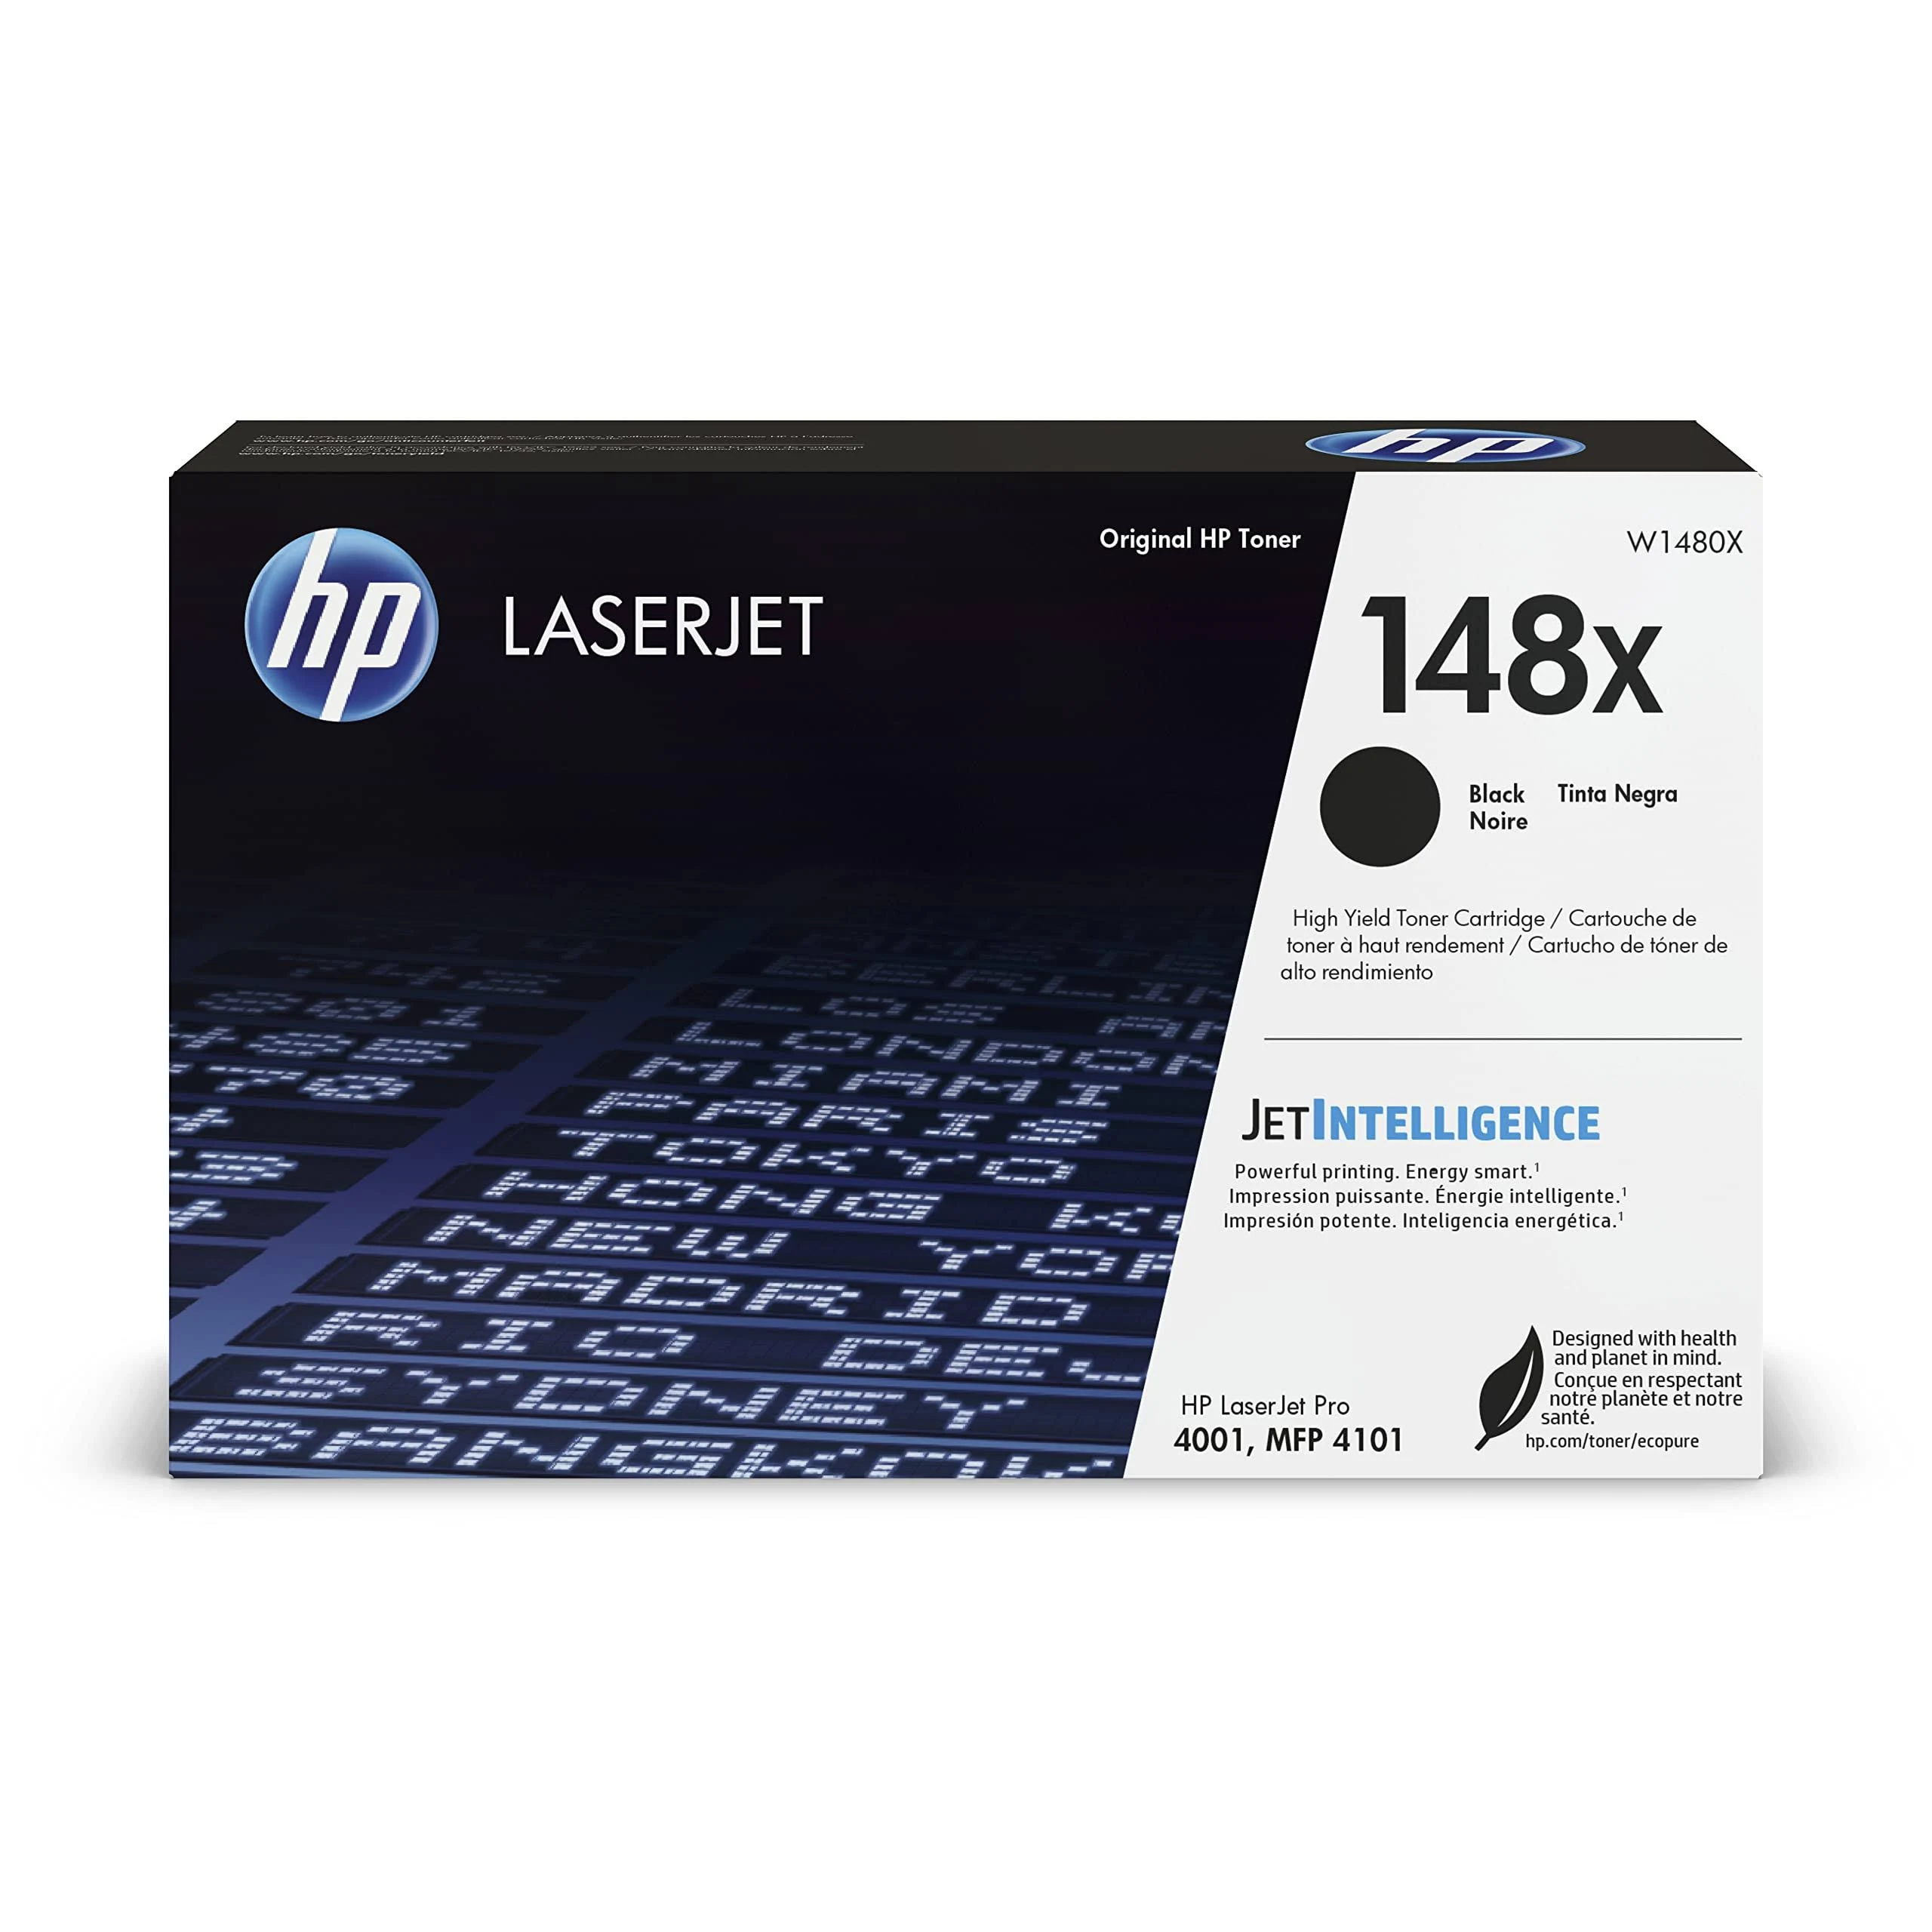 HP 148X Black Toner Cartridge (9,500 pages) - W1480X for HP LaserJet Series Printer